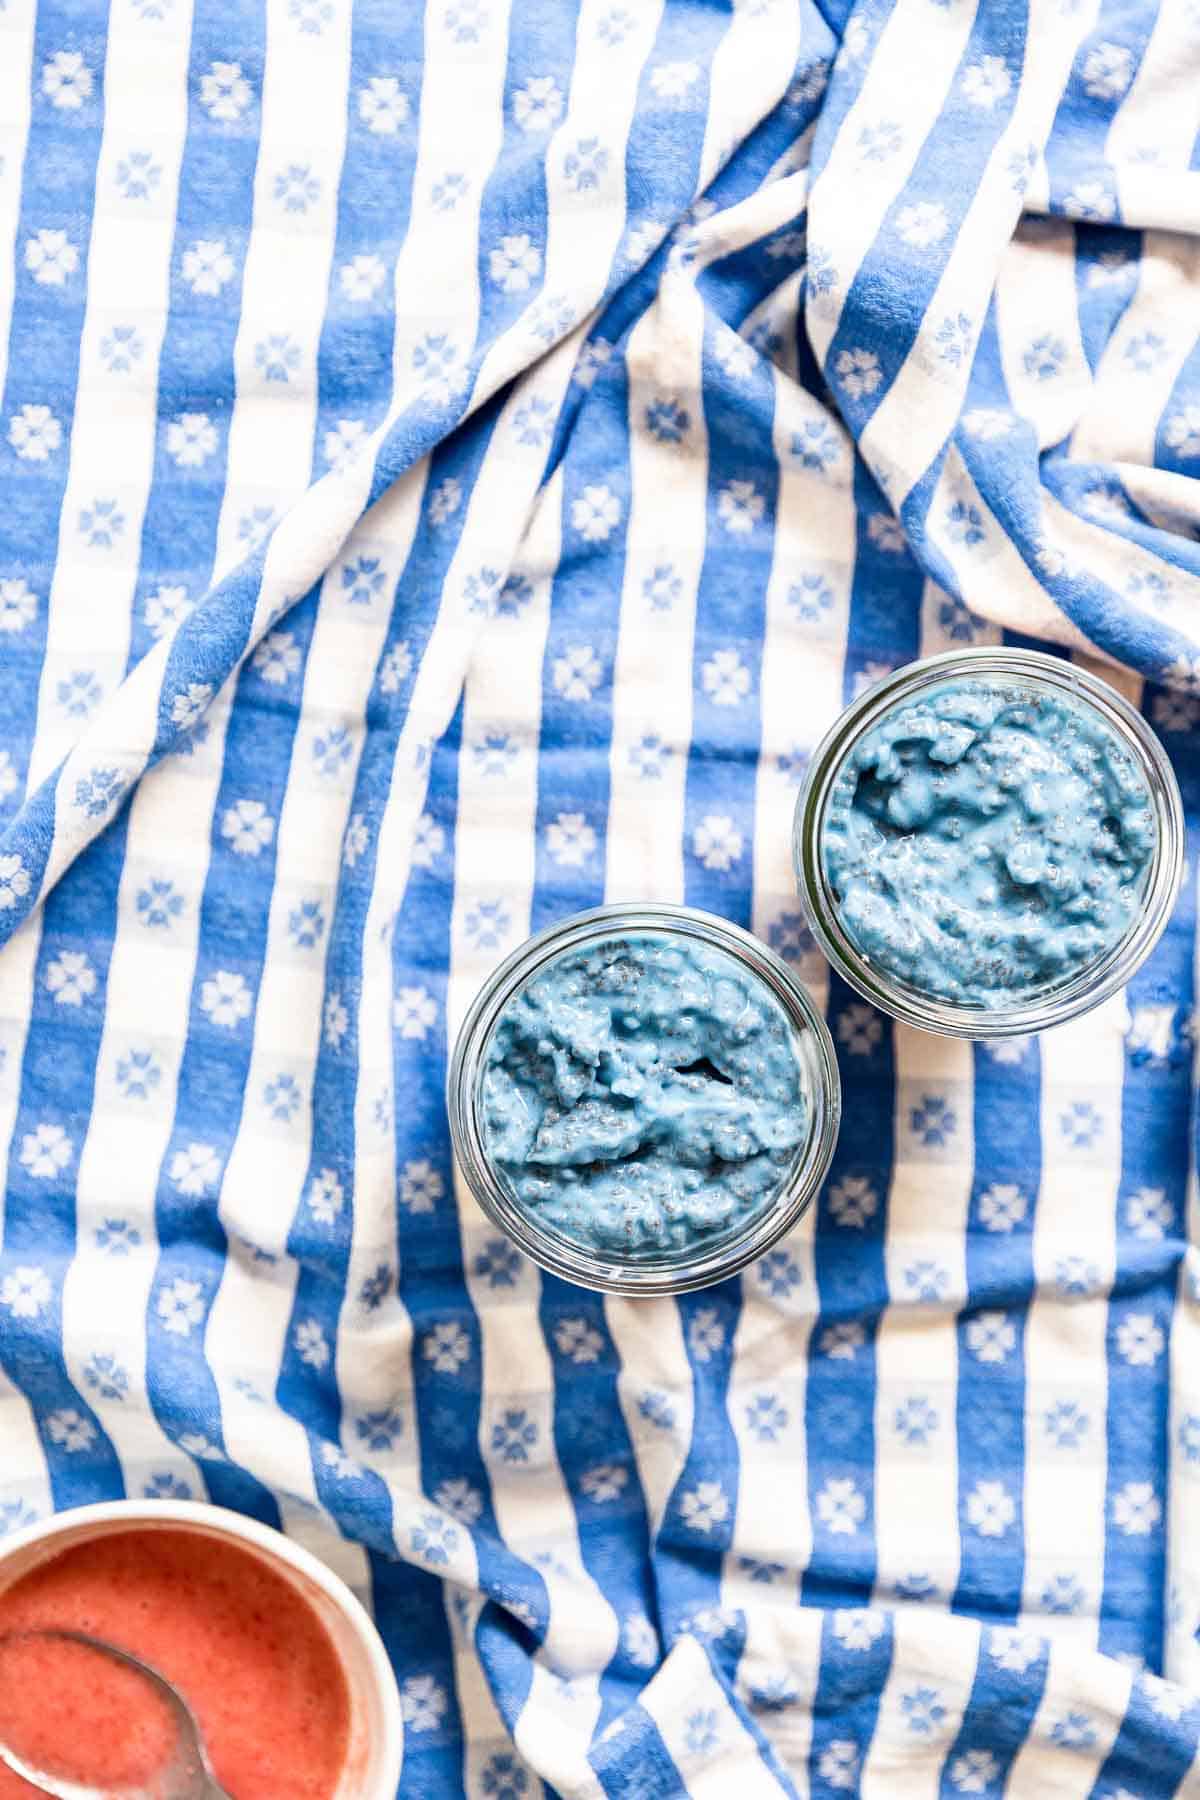 Blue chia yogurt in a glass jar on top of a blue gingham tablecloth.